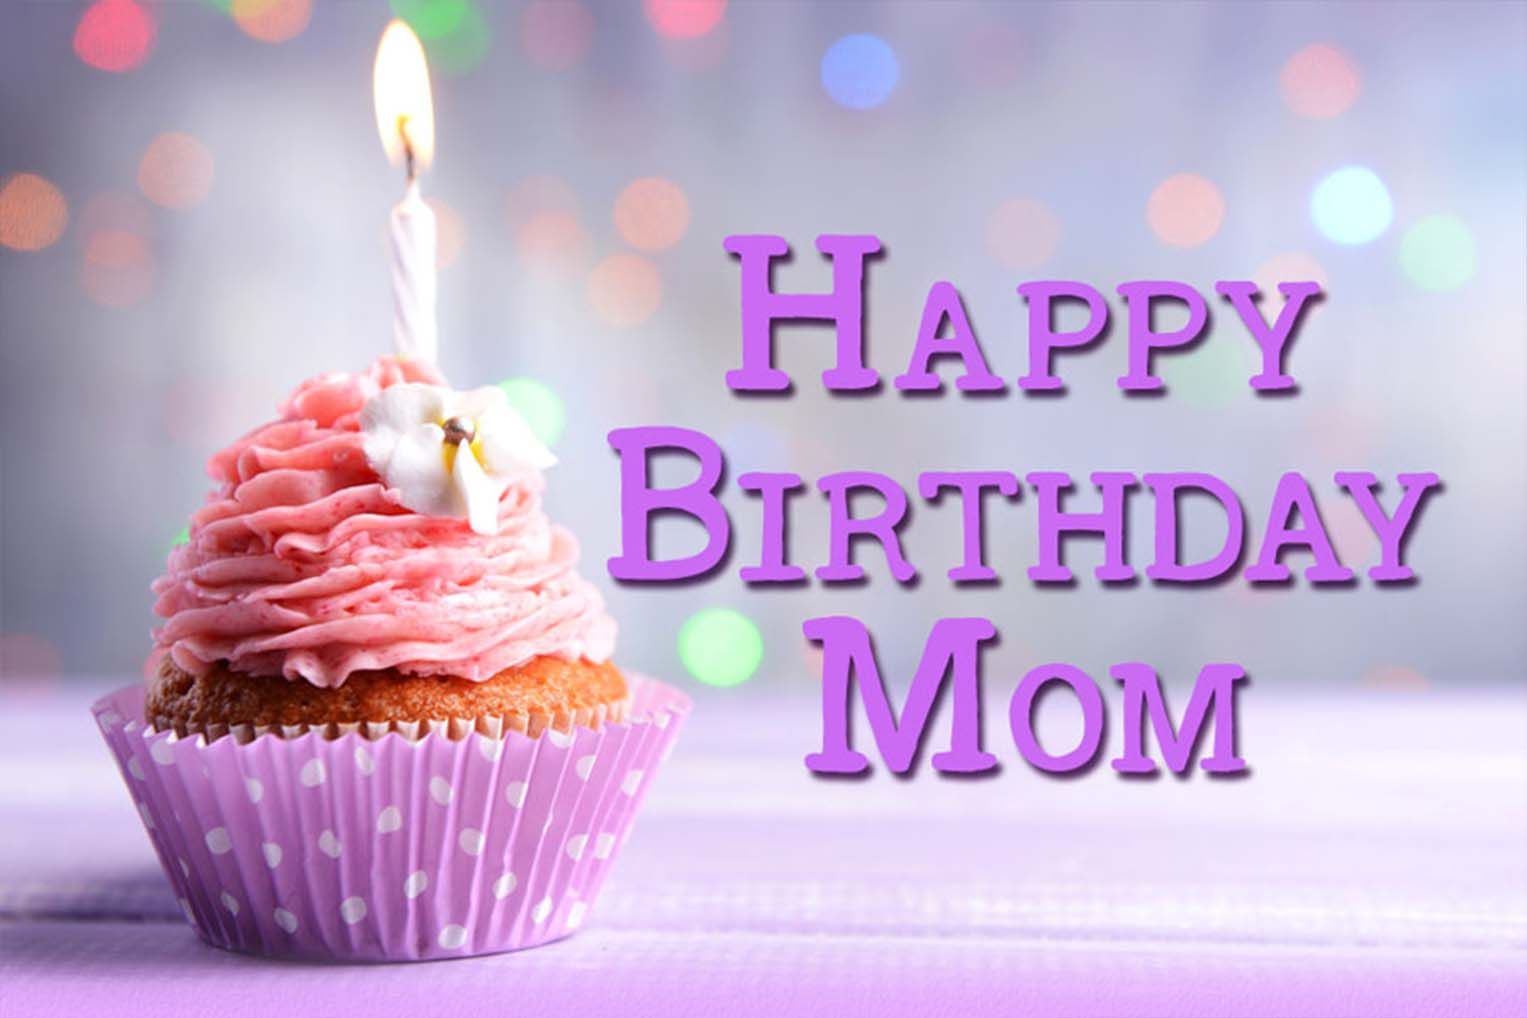 Happy Birthday Mom Greetings